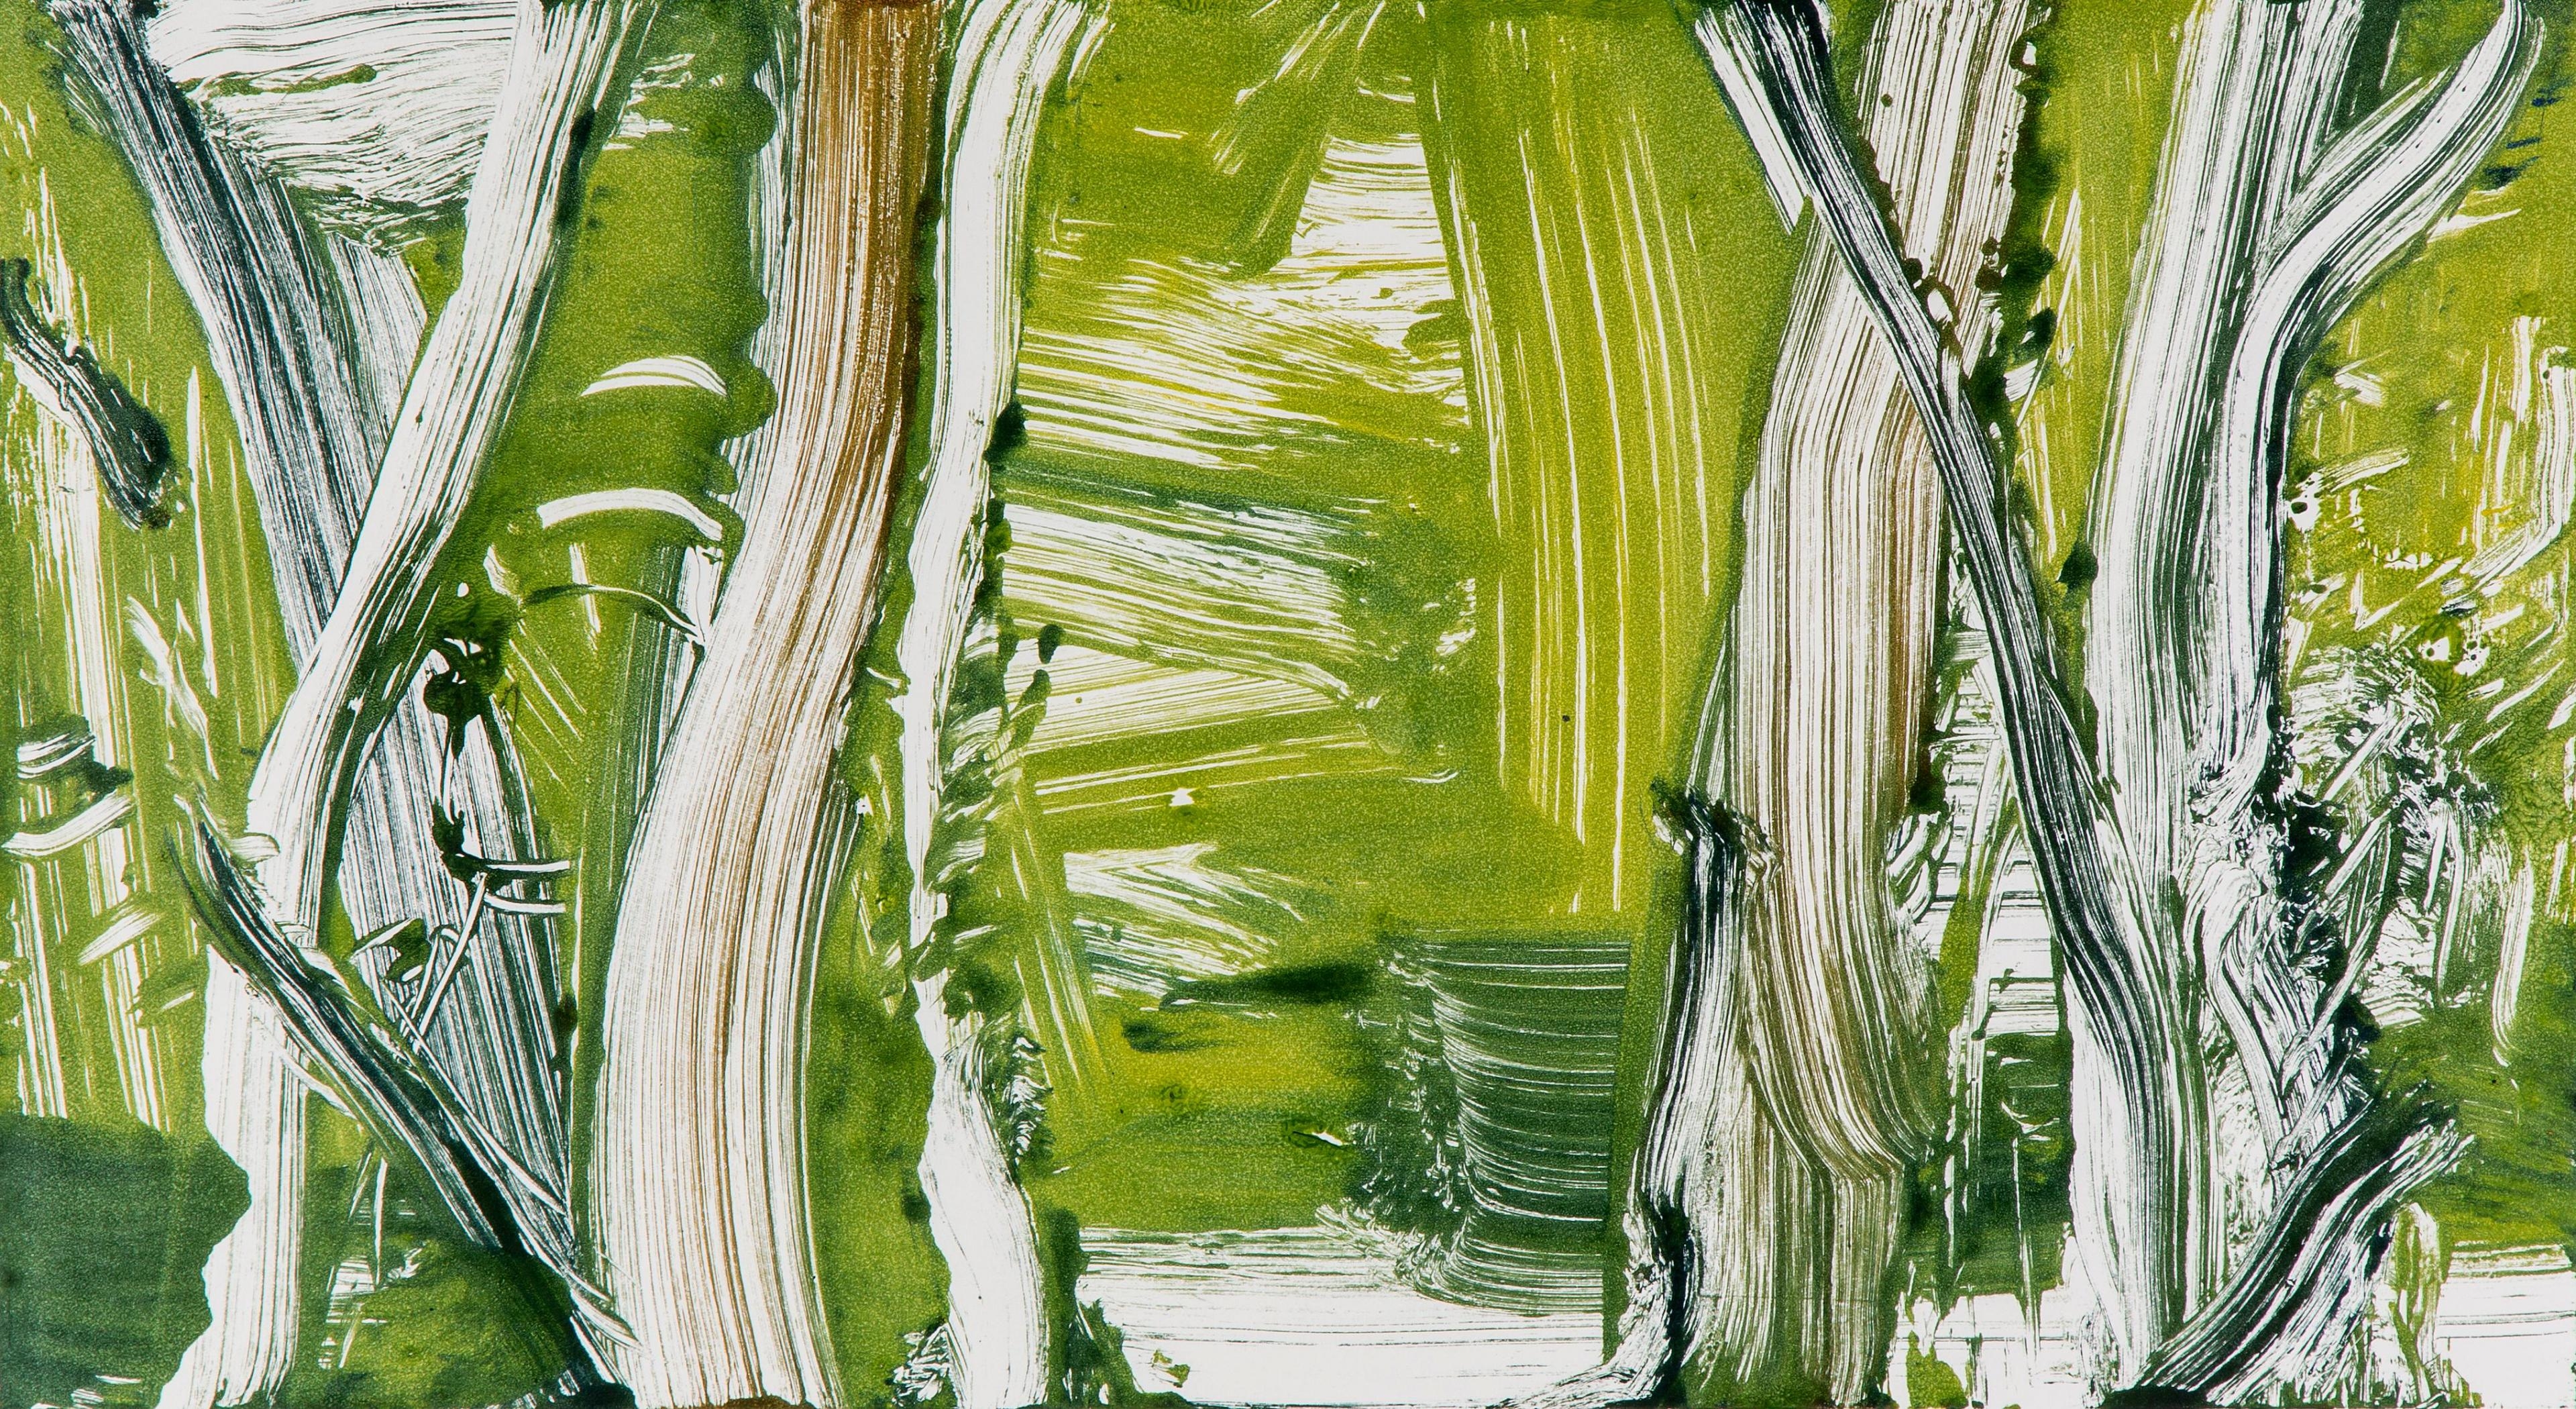 Artwork by Robert Zandvliet, Untitled, Made of monotype in green